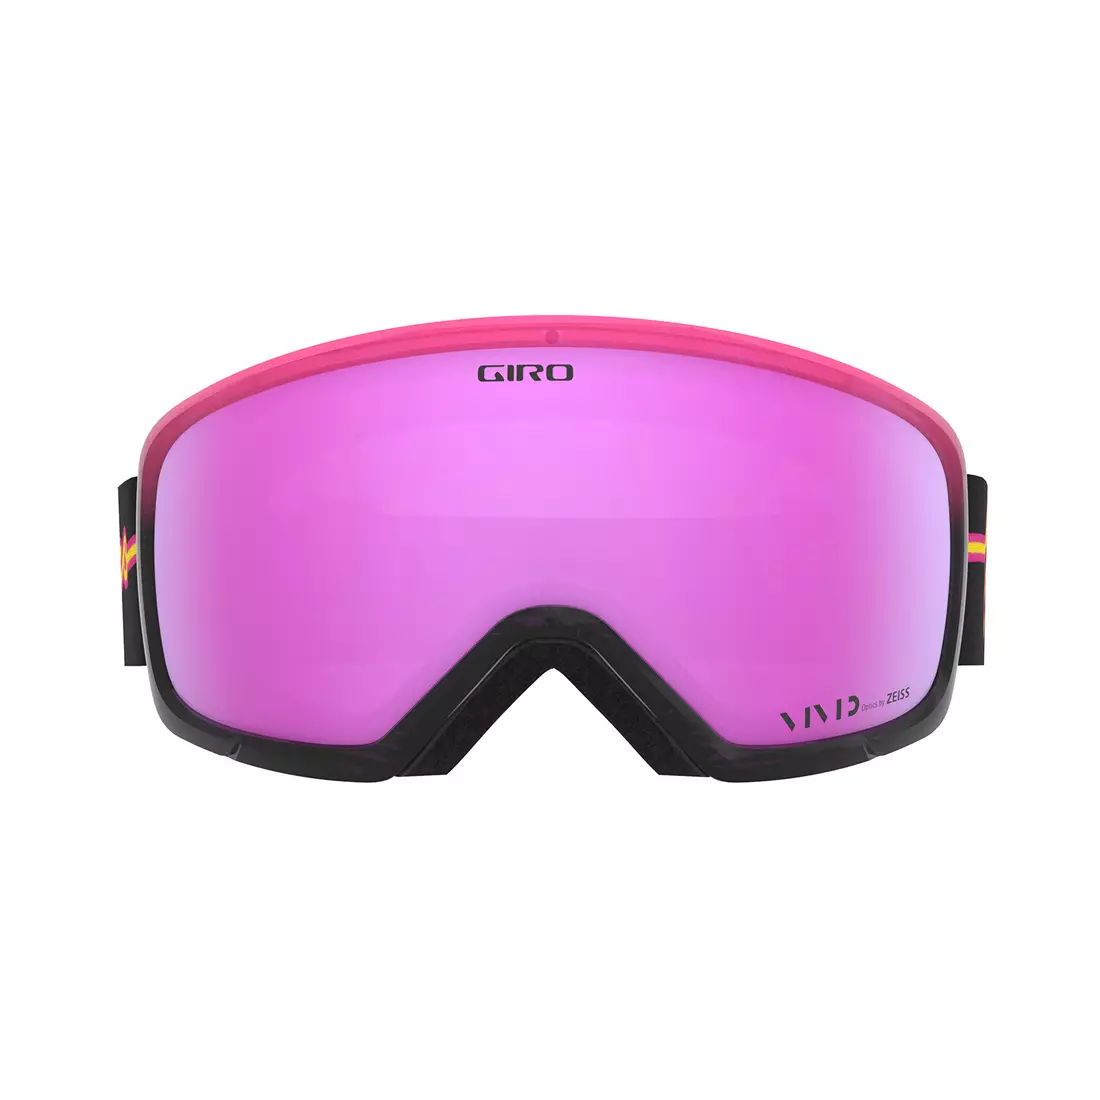 GIRO women's winter ski/snowboard goggles millie pink neon lights (VIVID PINK 32% S2) GR-7119832